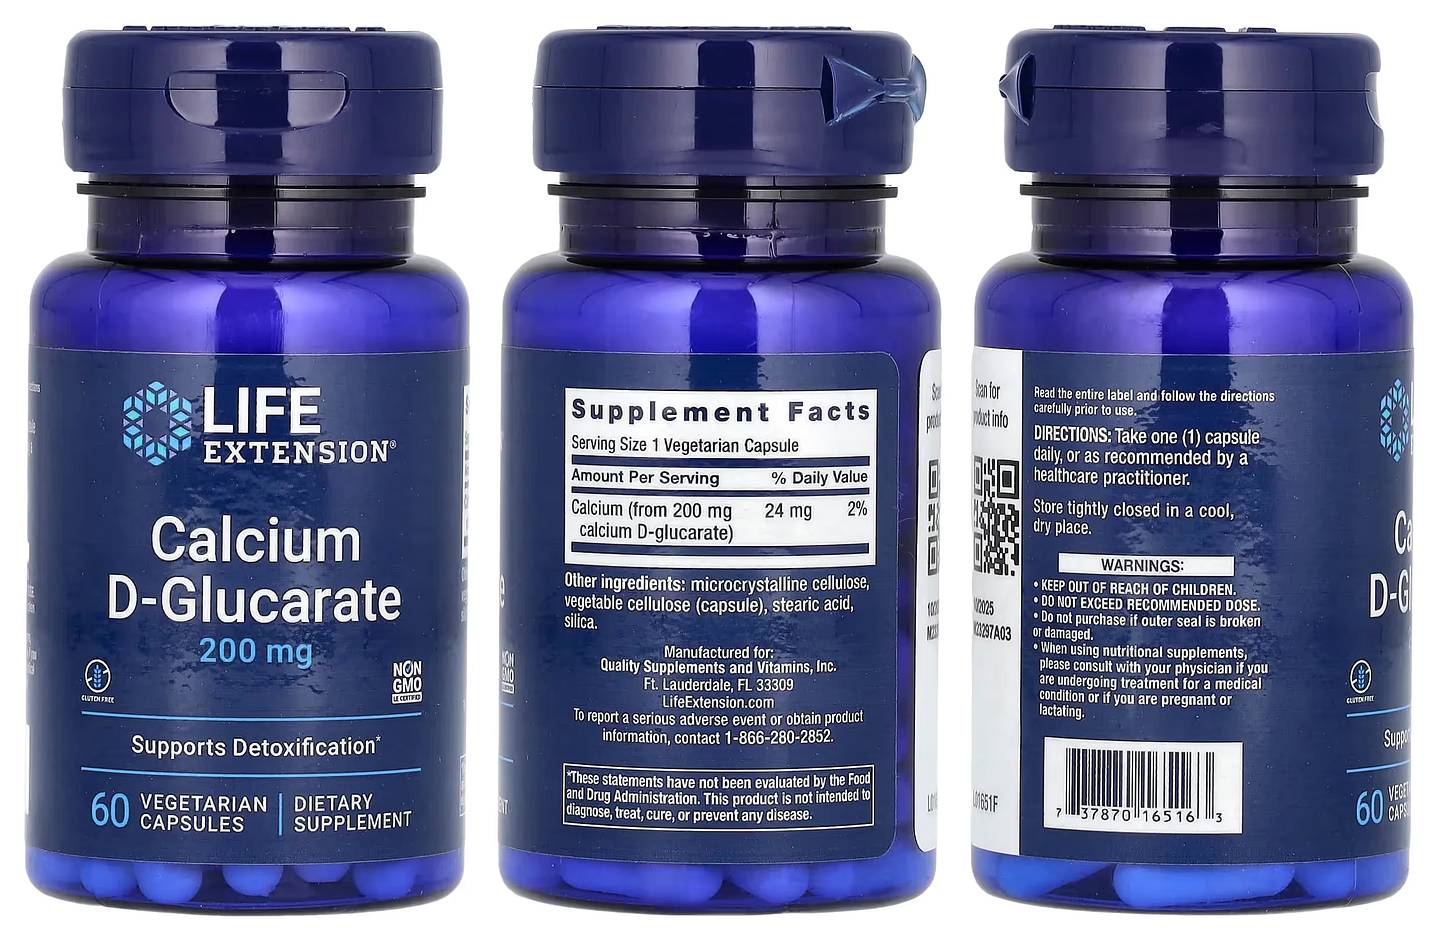 Life Extension, Calcium D-Glucarate packaging